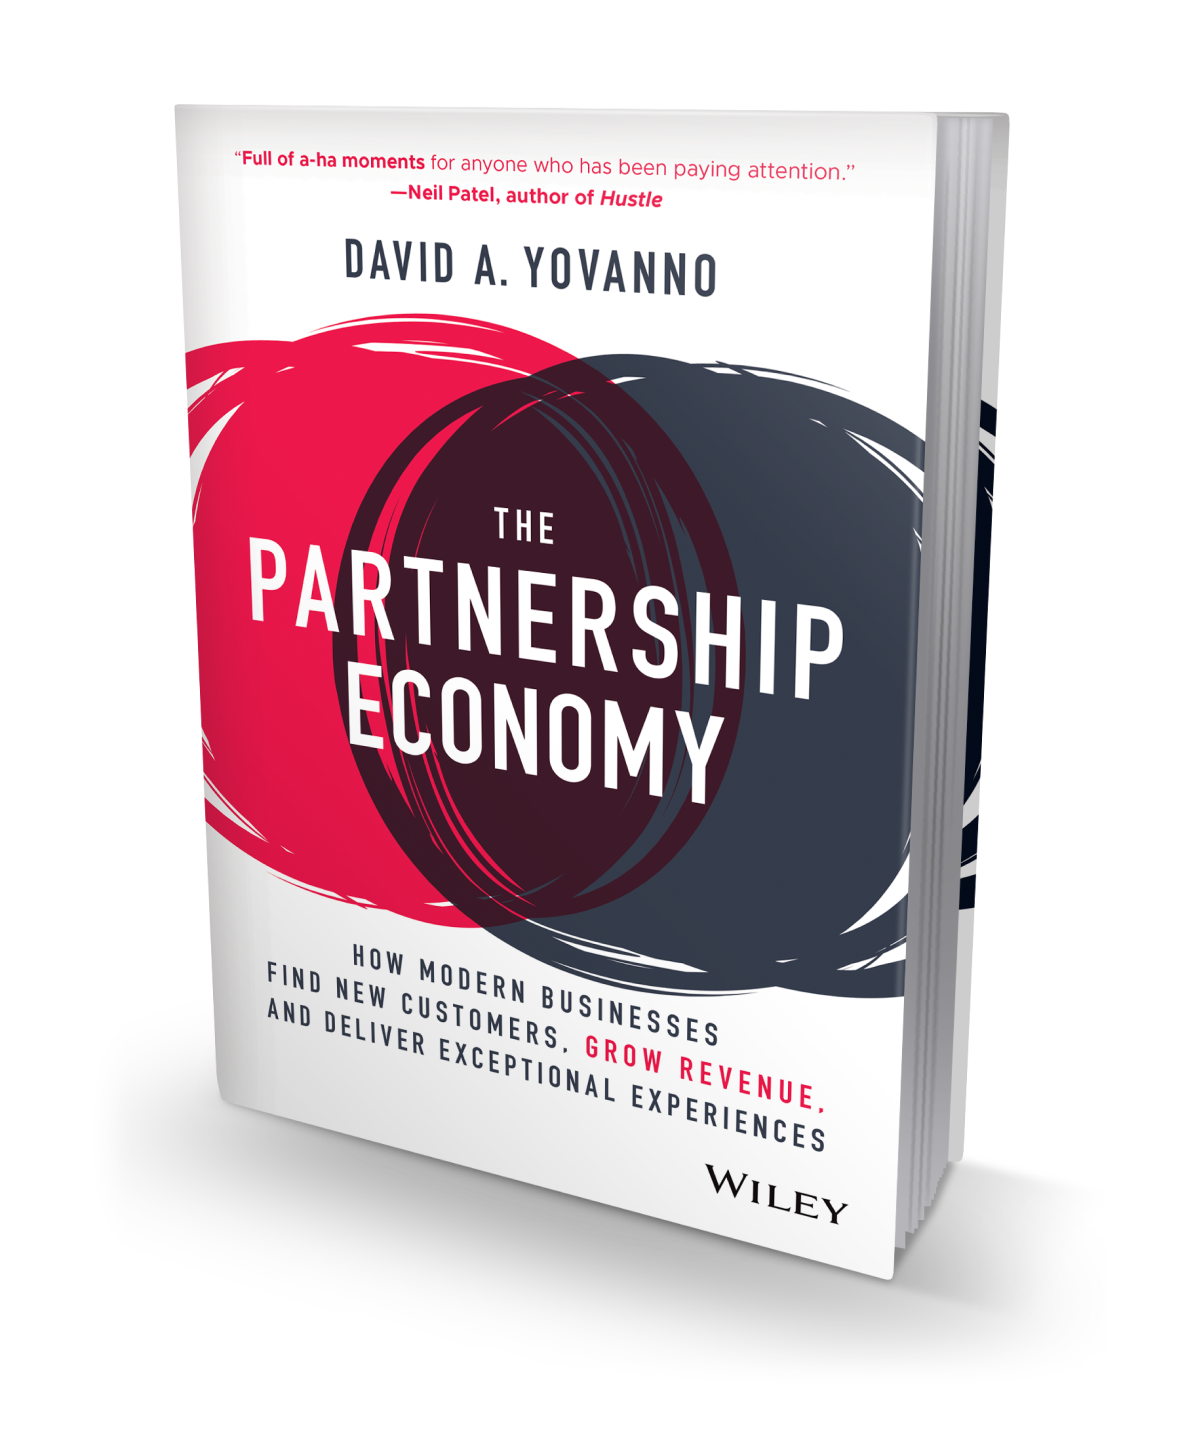 The Partnership Economy book